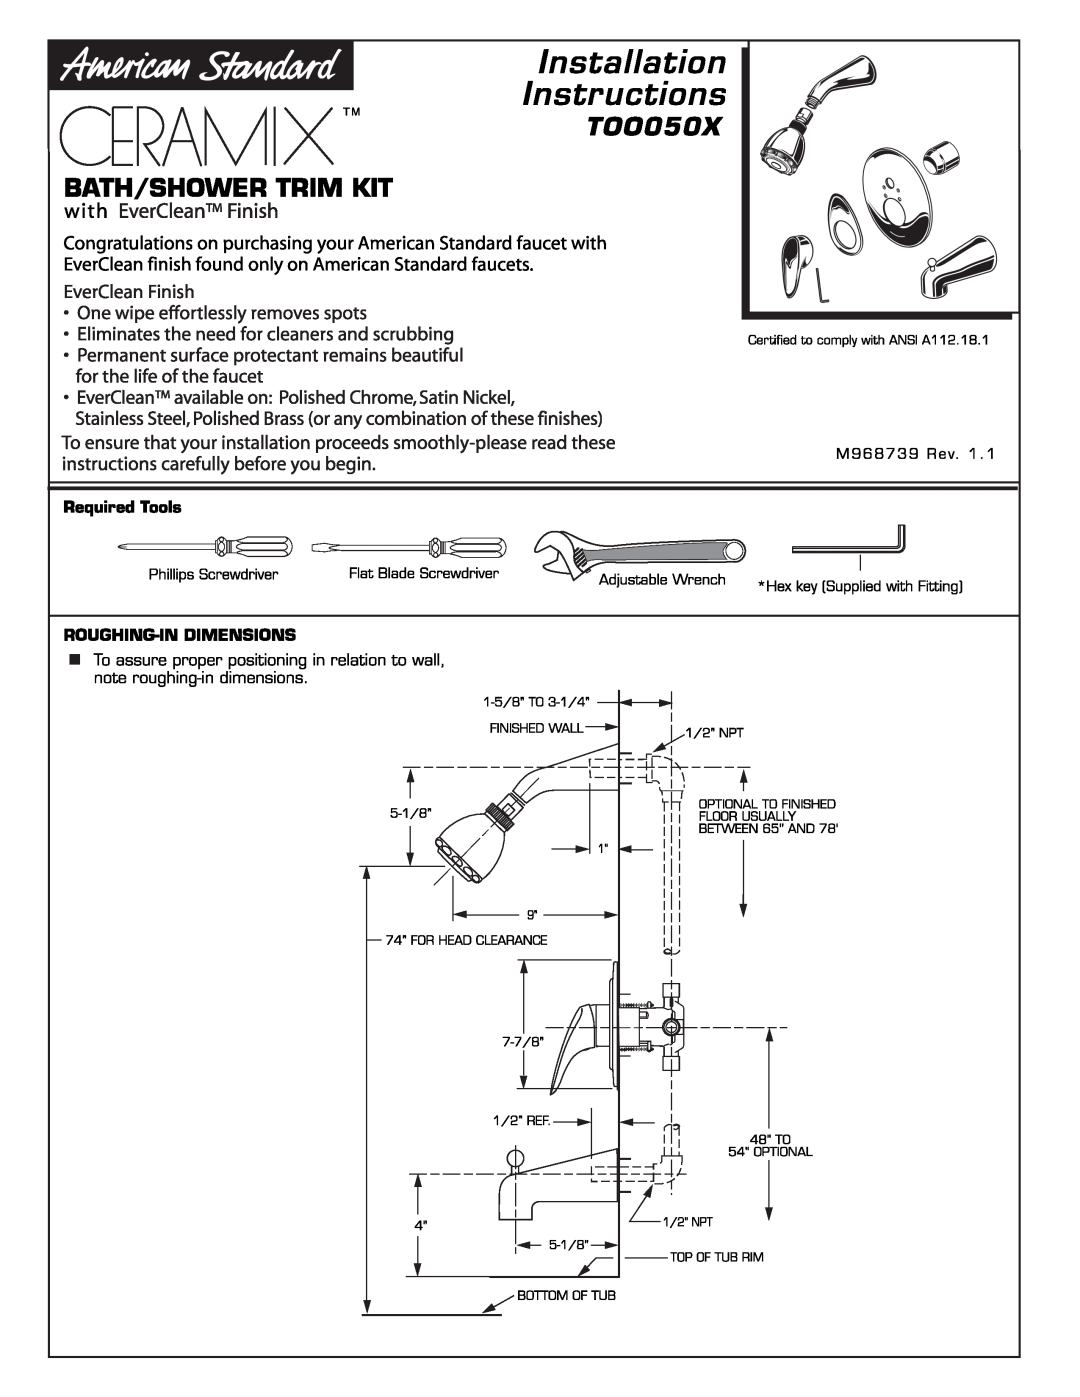 American Standard T00050X manual 